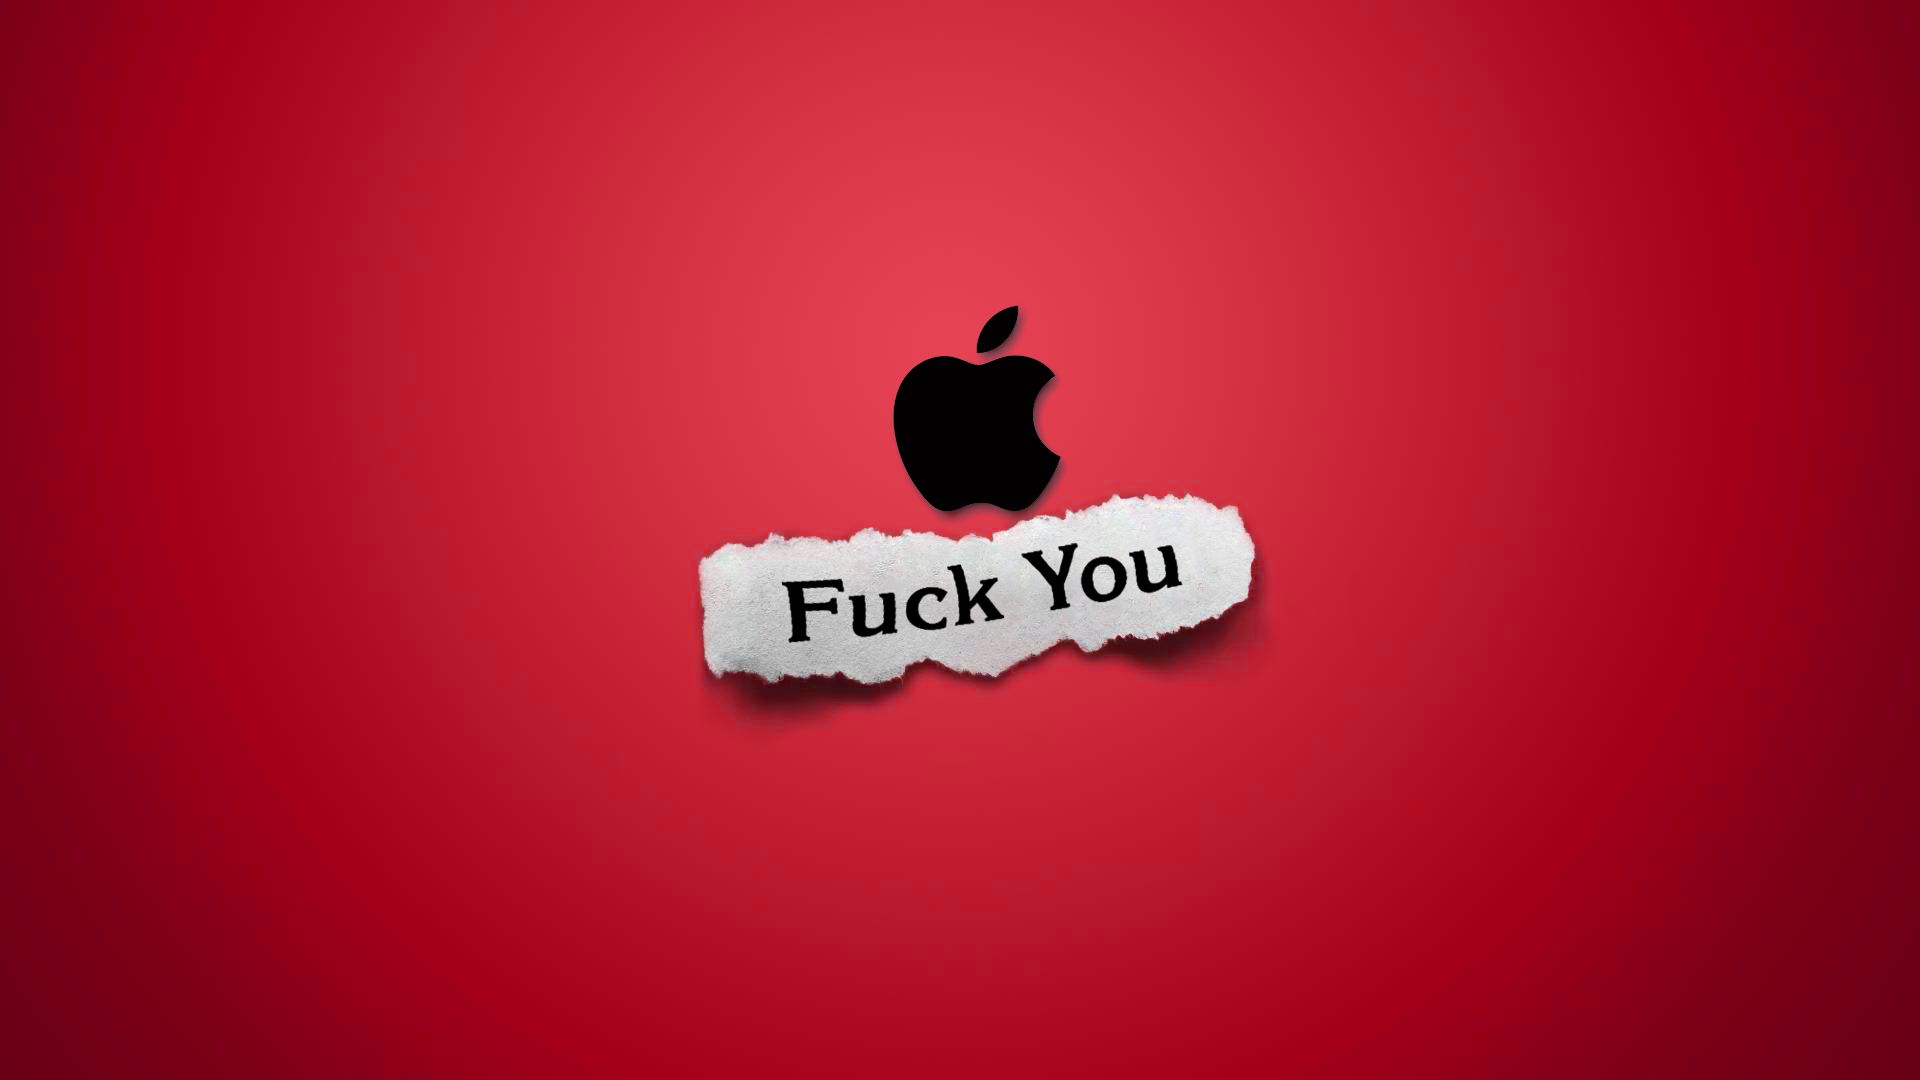 Mac Apple Fuck You Wallpaper Desktop 19 #3923 Wallpaper | High ...